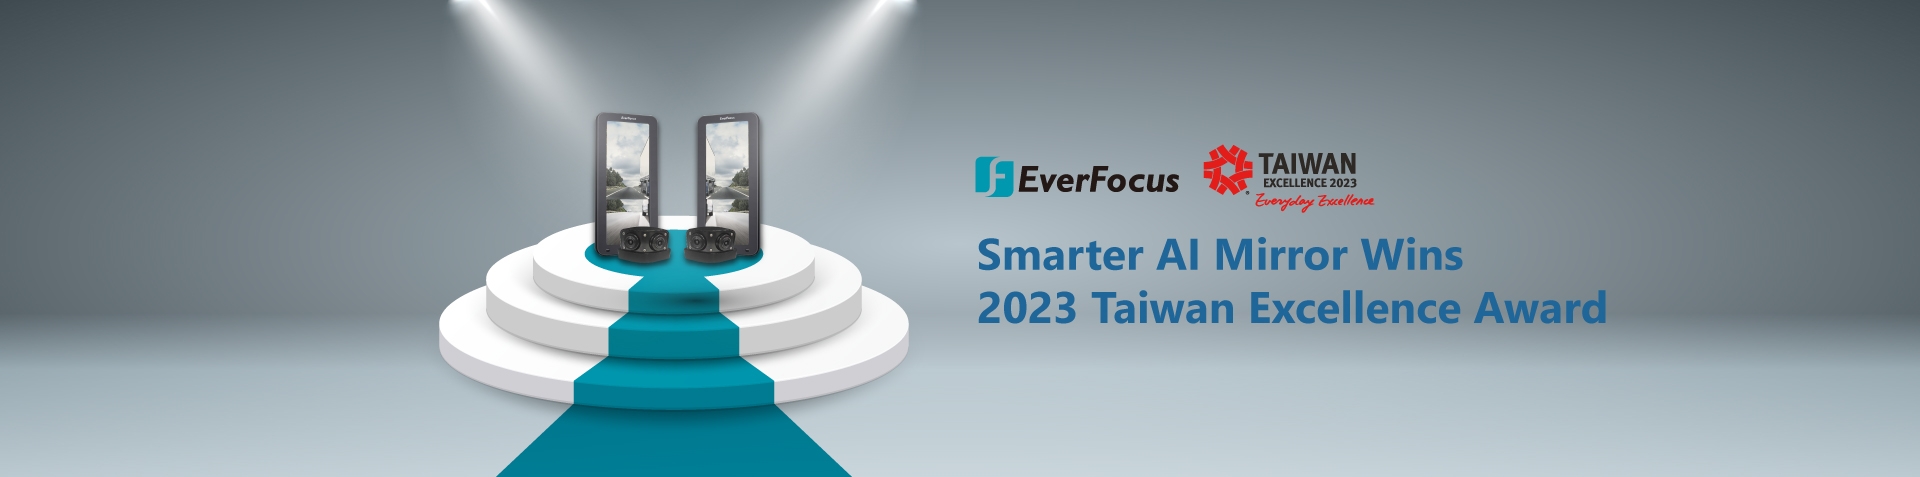 EverFocus  Prodcut has Won 2023 Taiwan Excellence Award